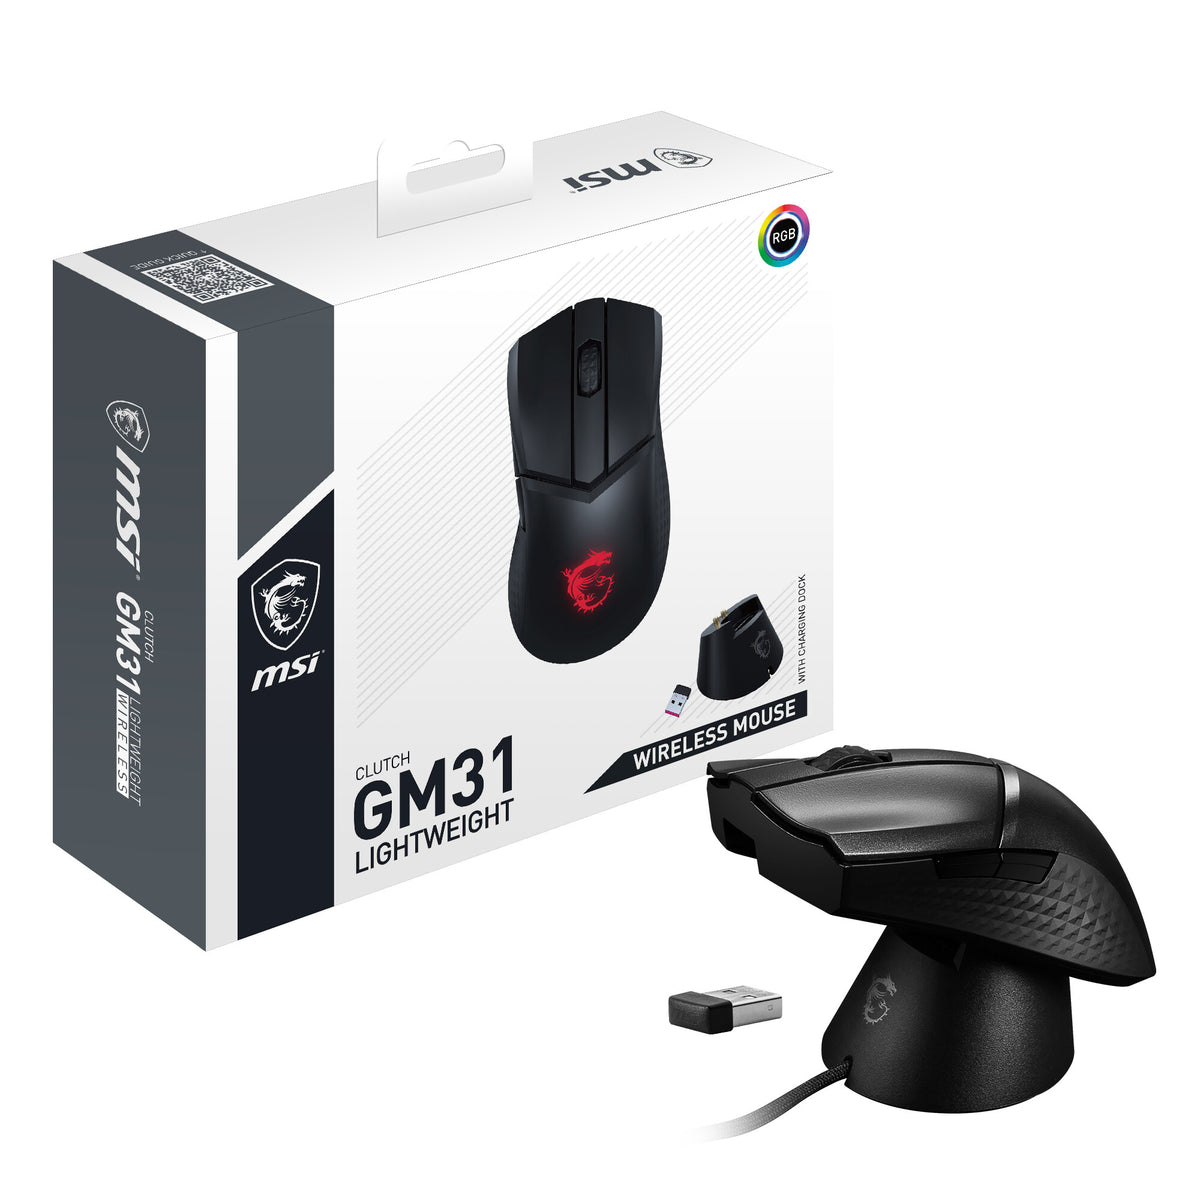 MSI CLUTCH GM31 LIGHTWEIGHT WIRELESS - RF Wireless Optical Mouse in Black - 12,000 DPI